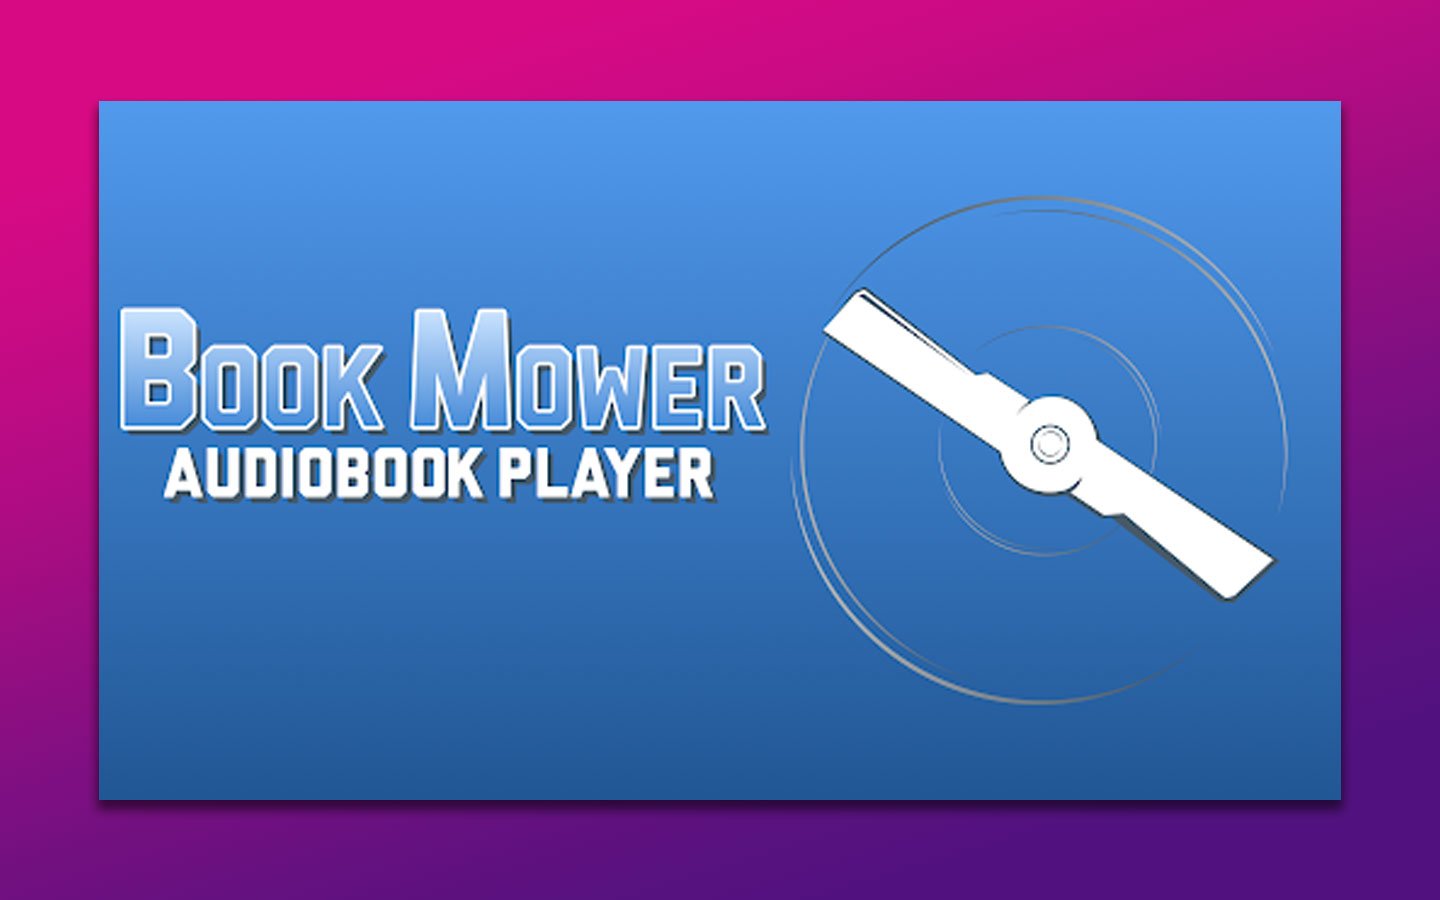 iPhone’s Book Mower Audiobook App